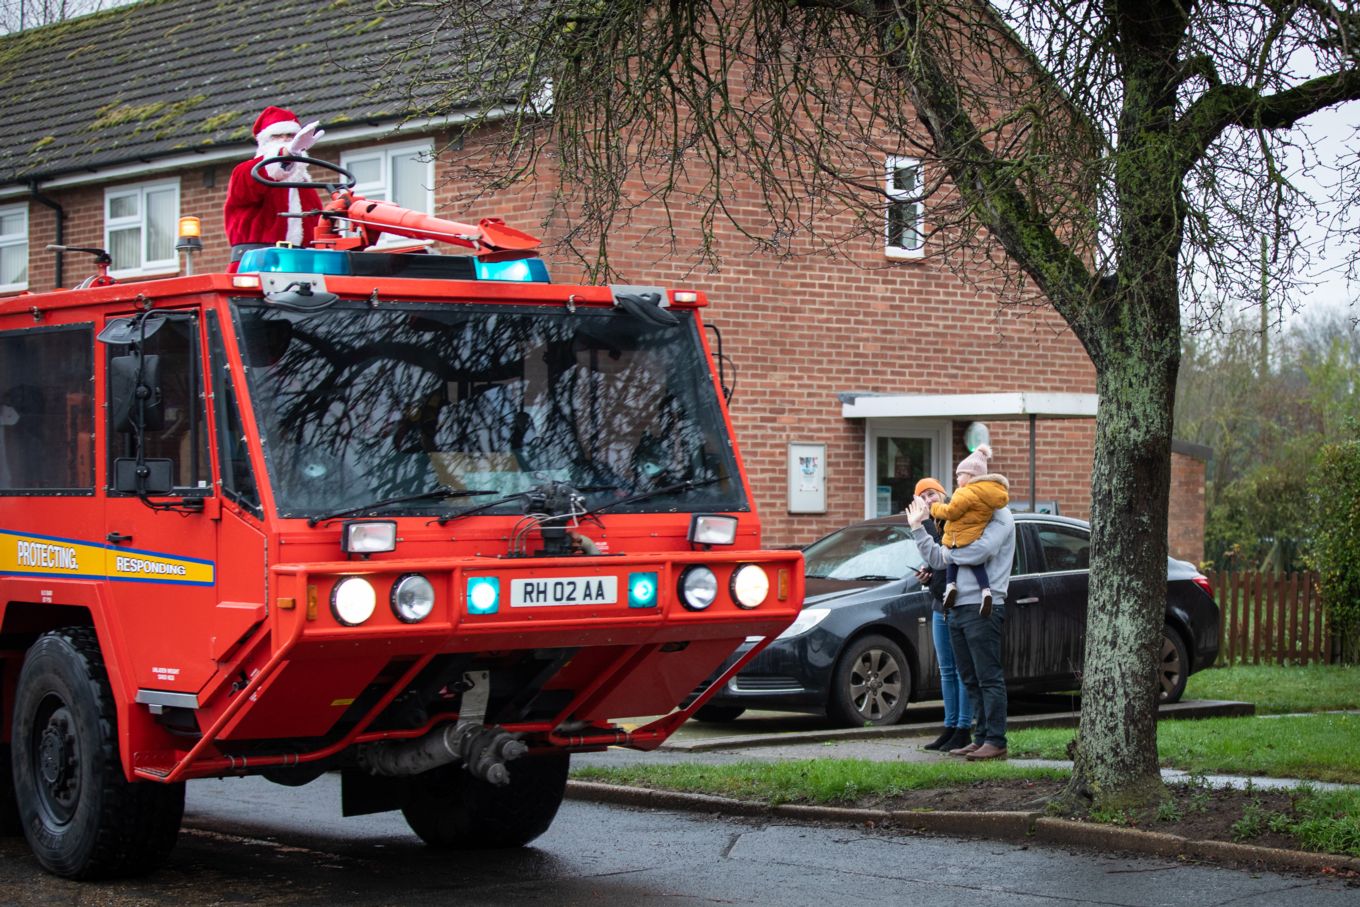 Santa on a fire engine waving to children